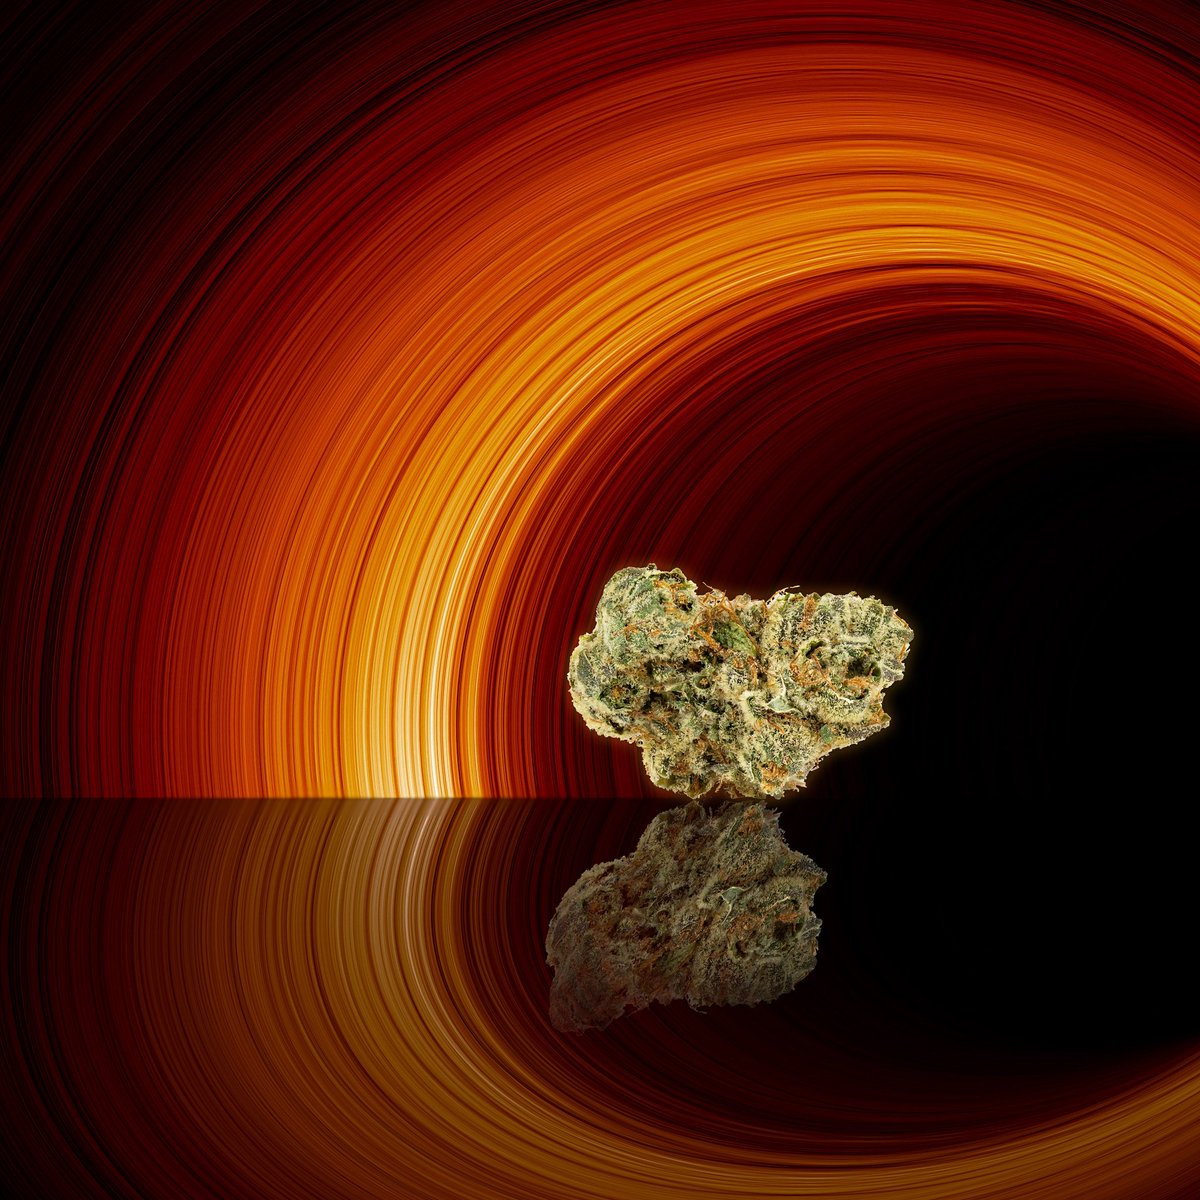 Strain highlight: Alien OG by @gocaliva 

#alienog #gocaliva #cannabisstrain #indicastrain #marijuanaflower